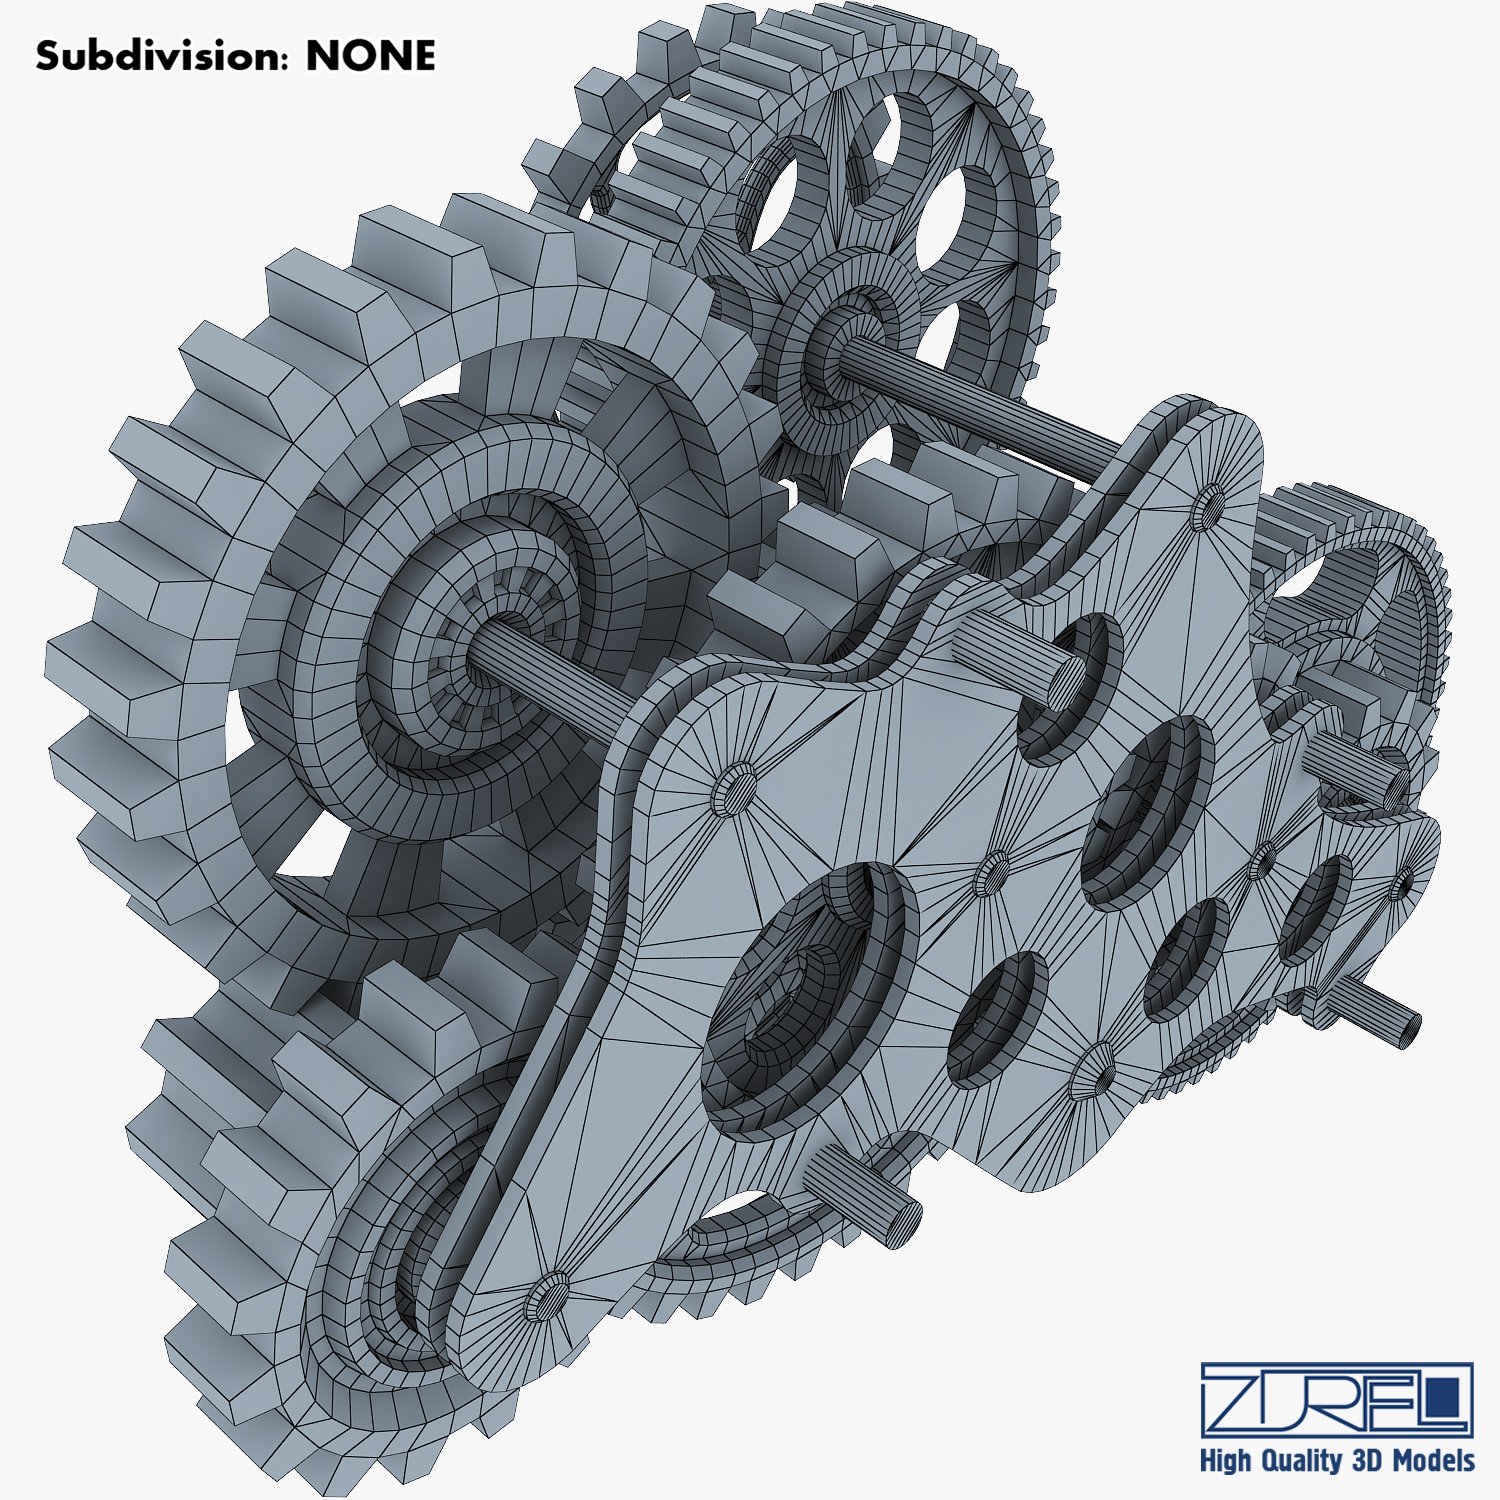 Gears 3D Model $20 - .skp .obj .c4d .3ds .3dm - Free3D